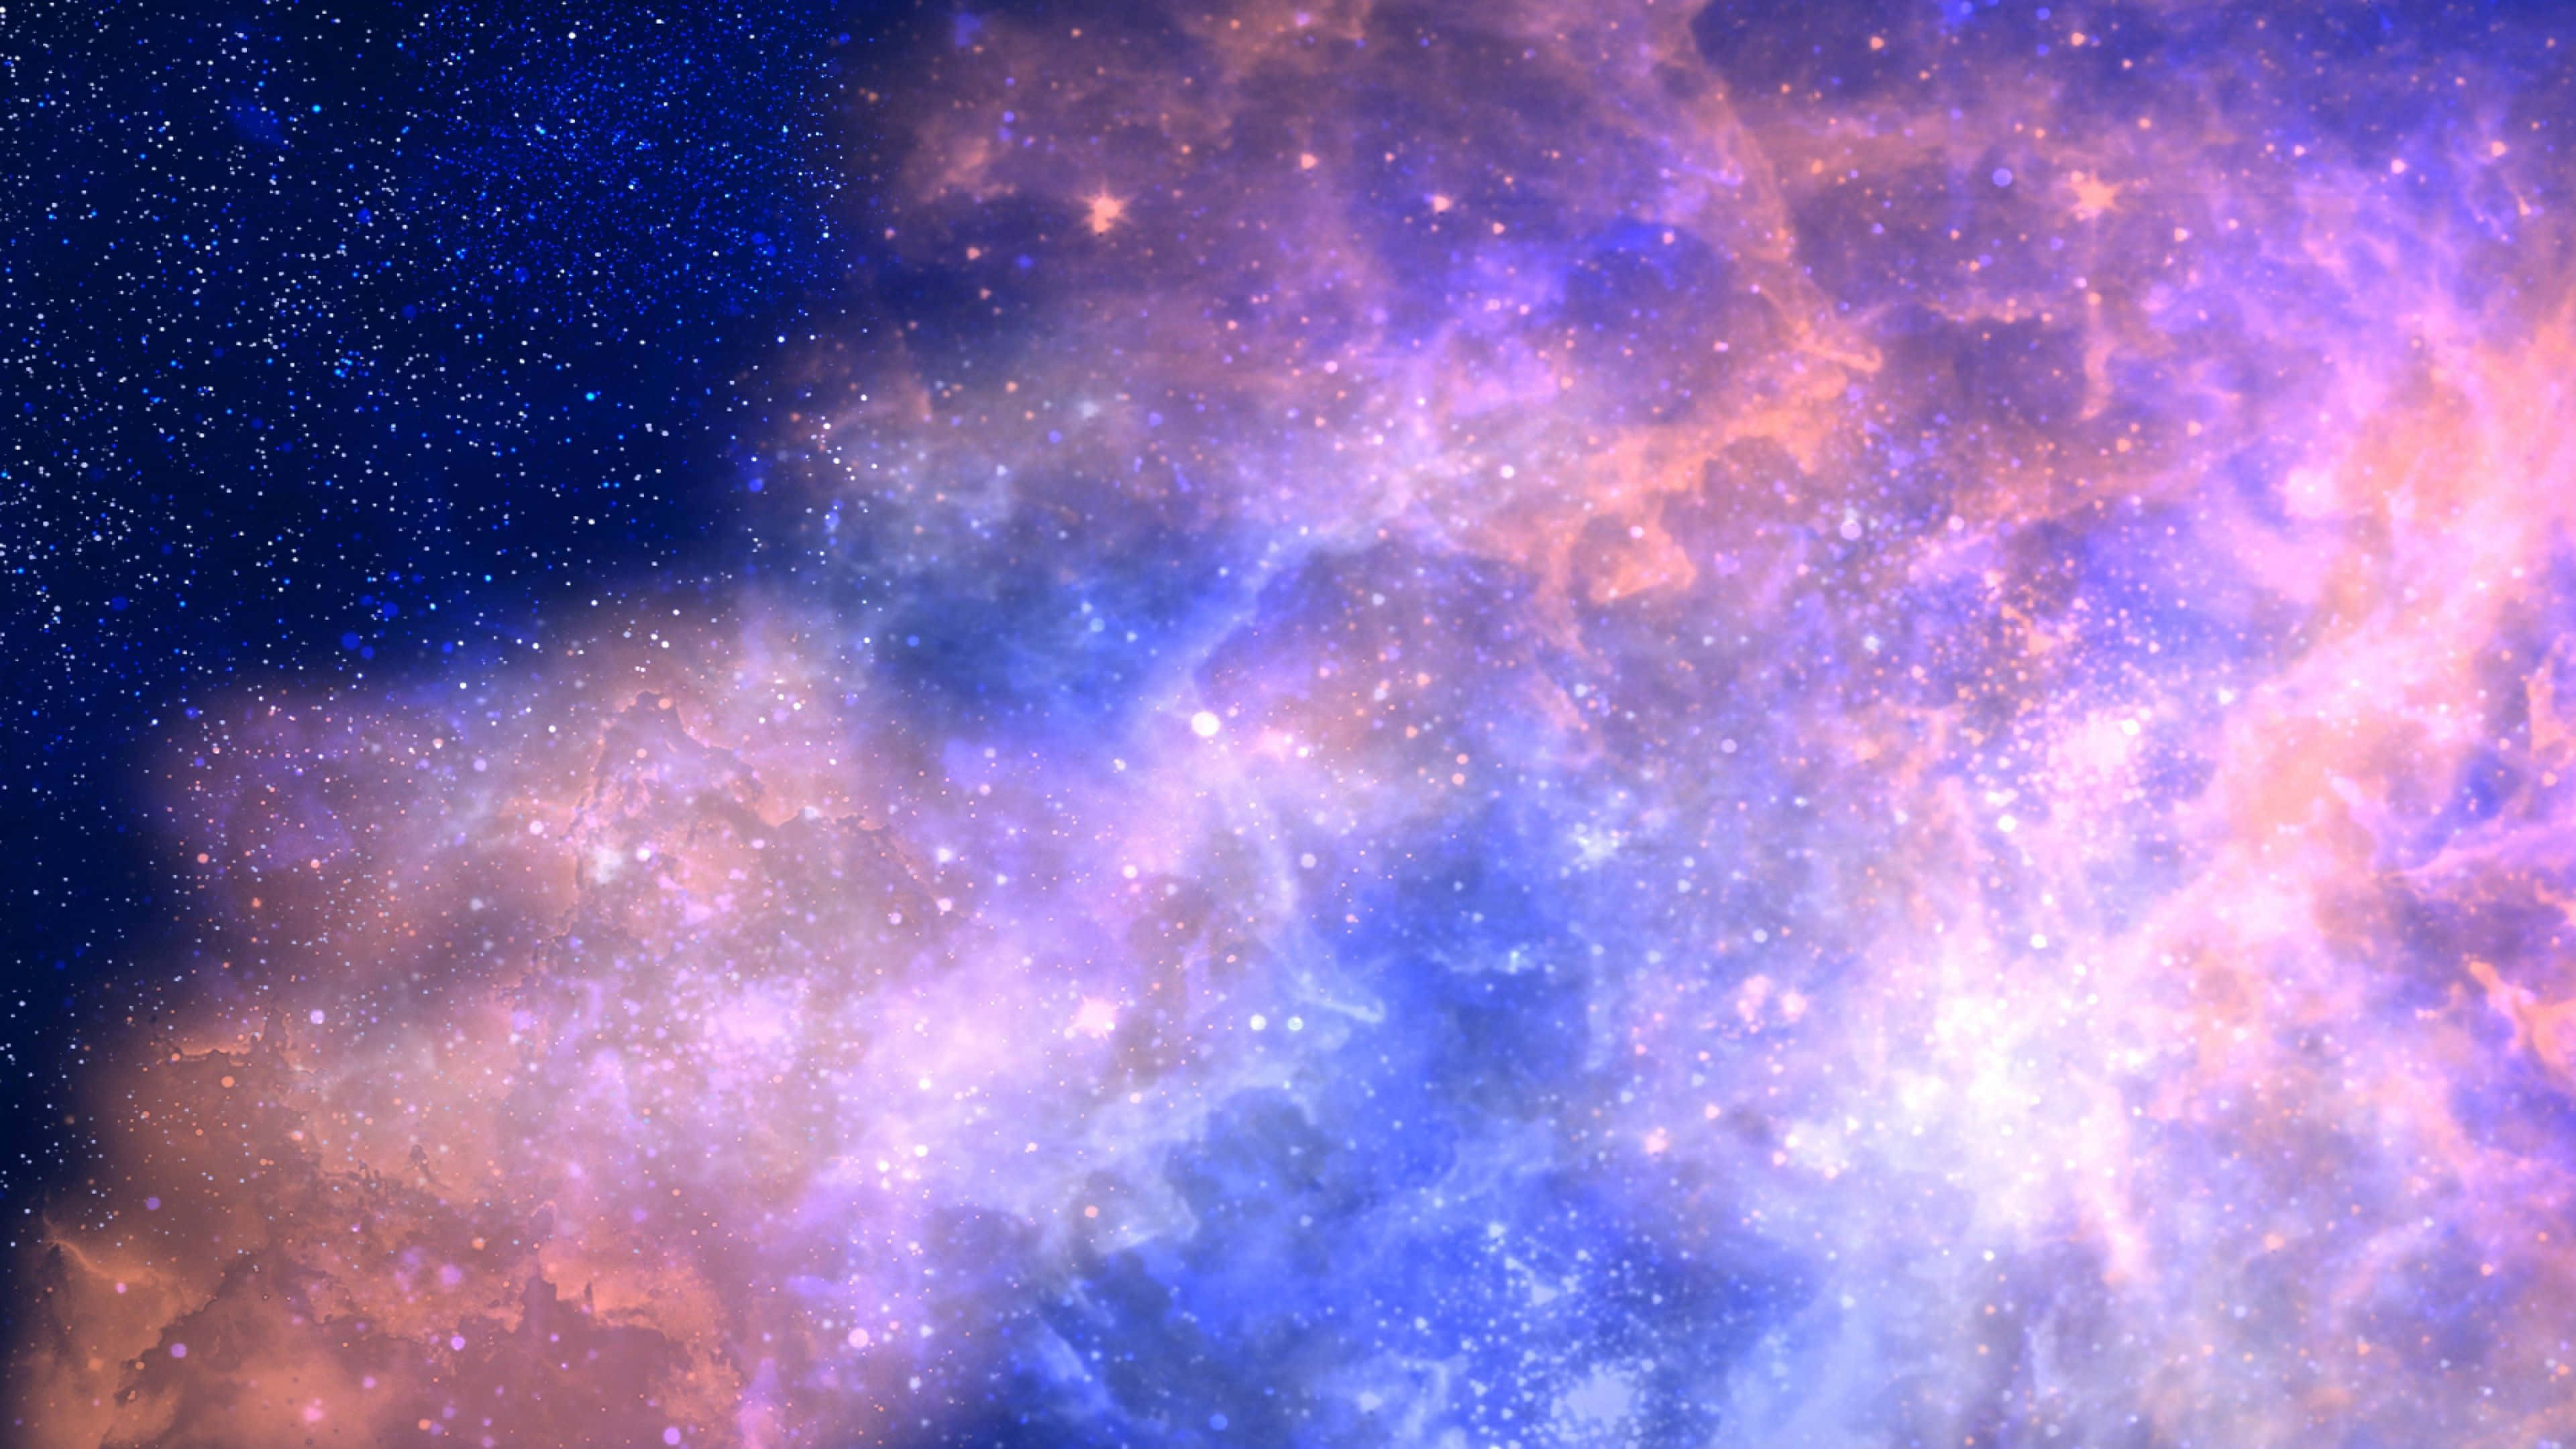 Breathtaking 4k Galaxy View Wallpaper